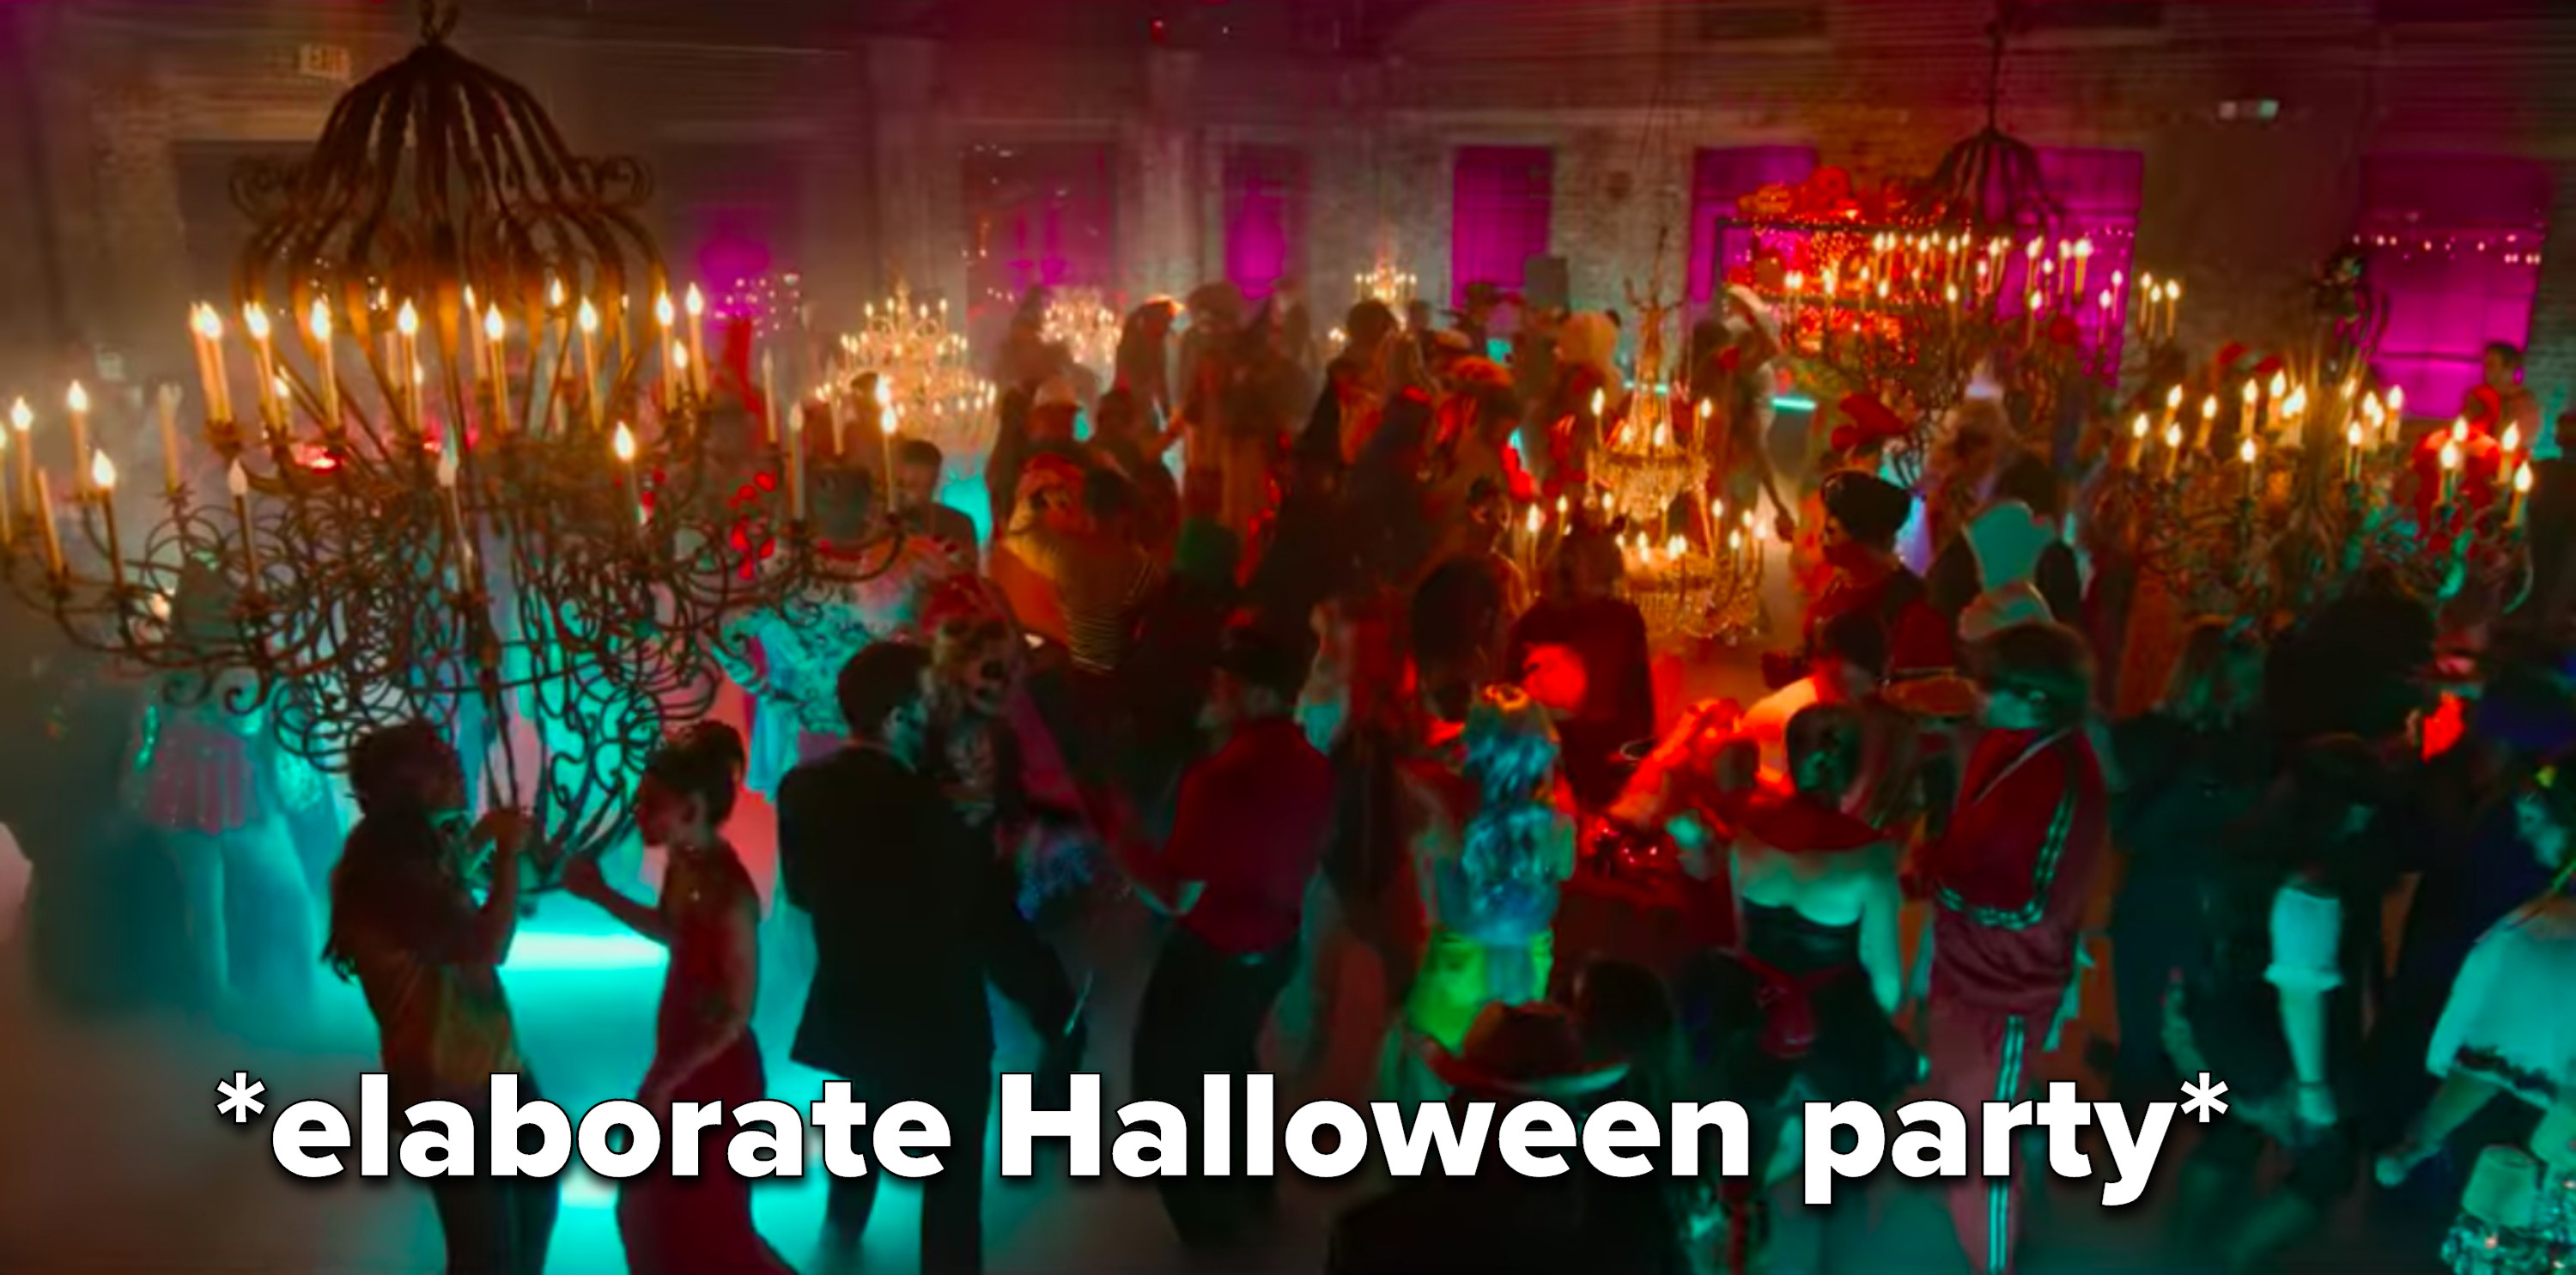 An elaborate Halloween party